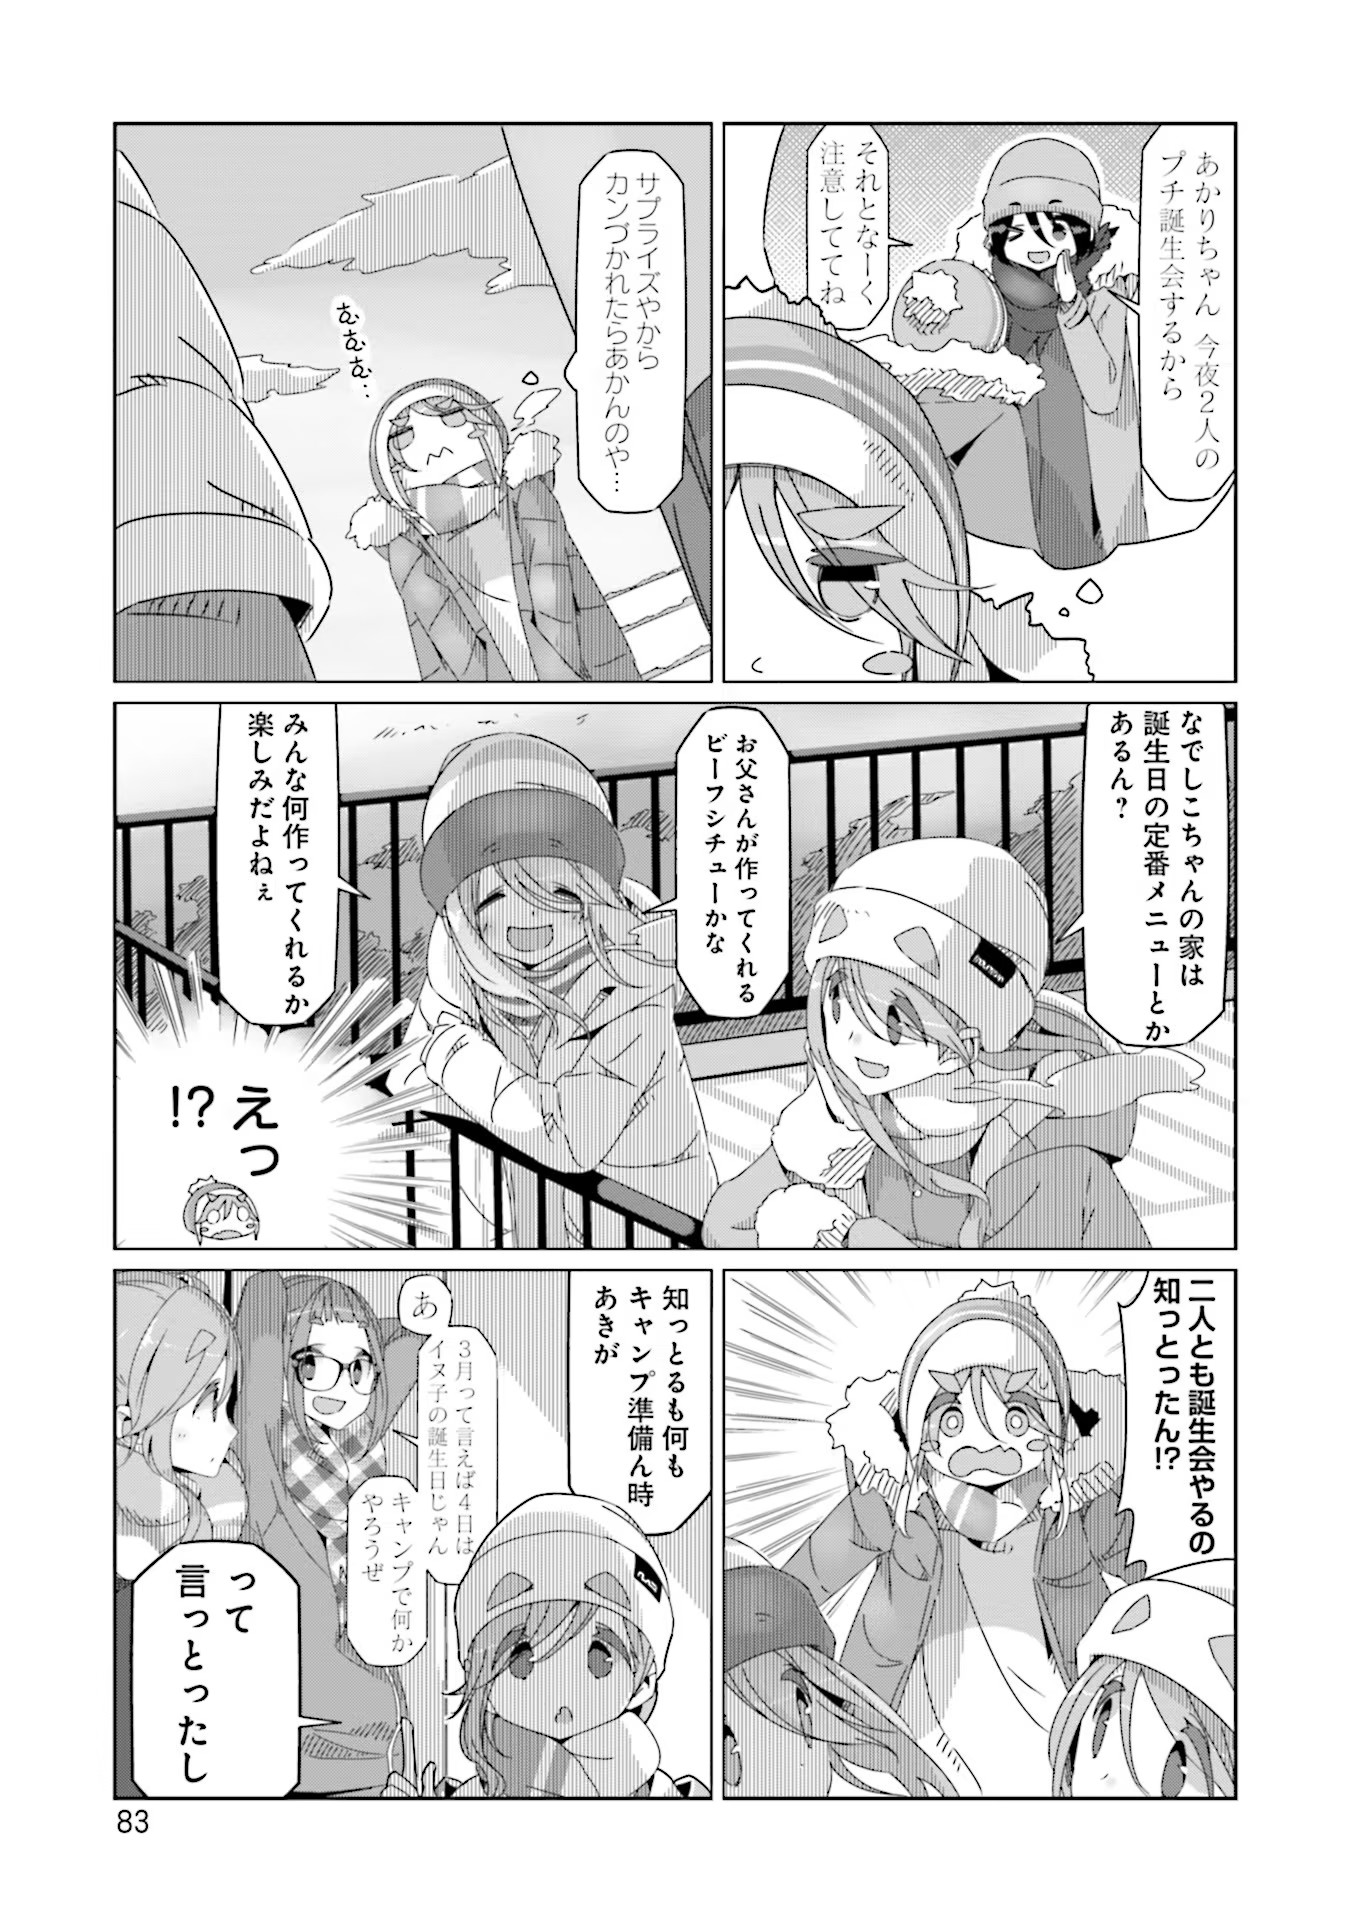 Yuru Camp - Chapter 50 - Page 3